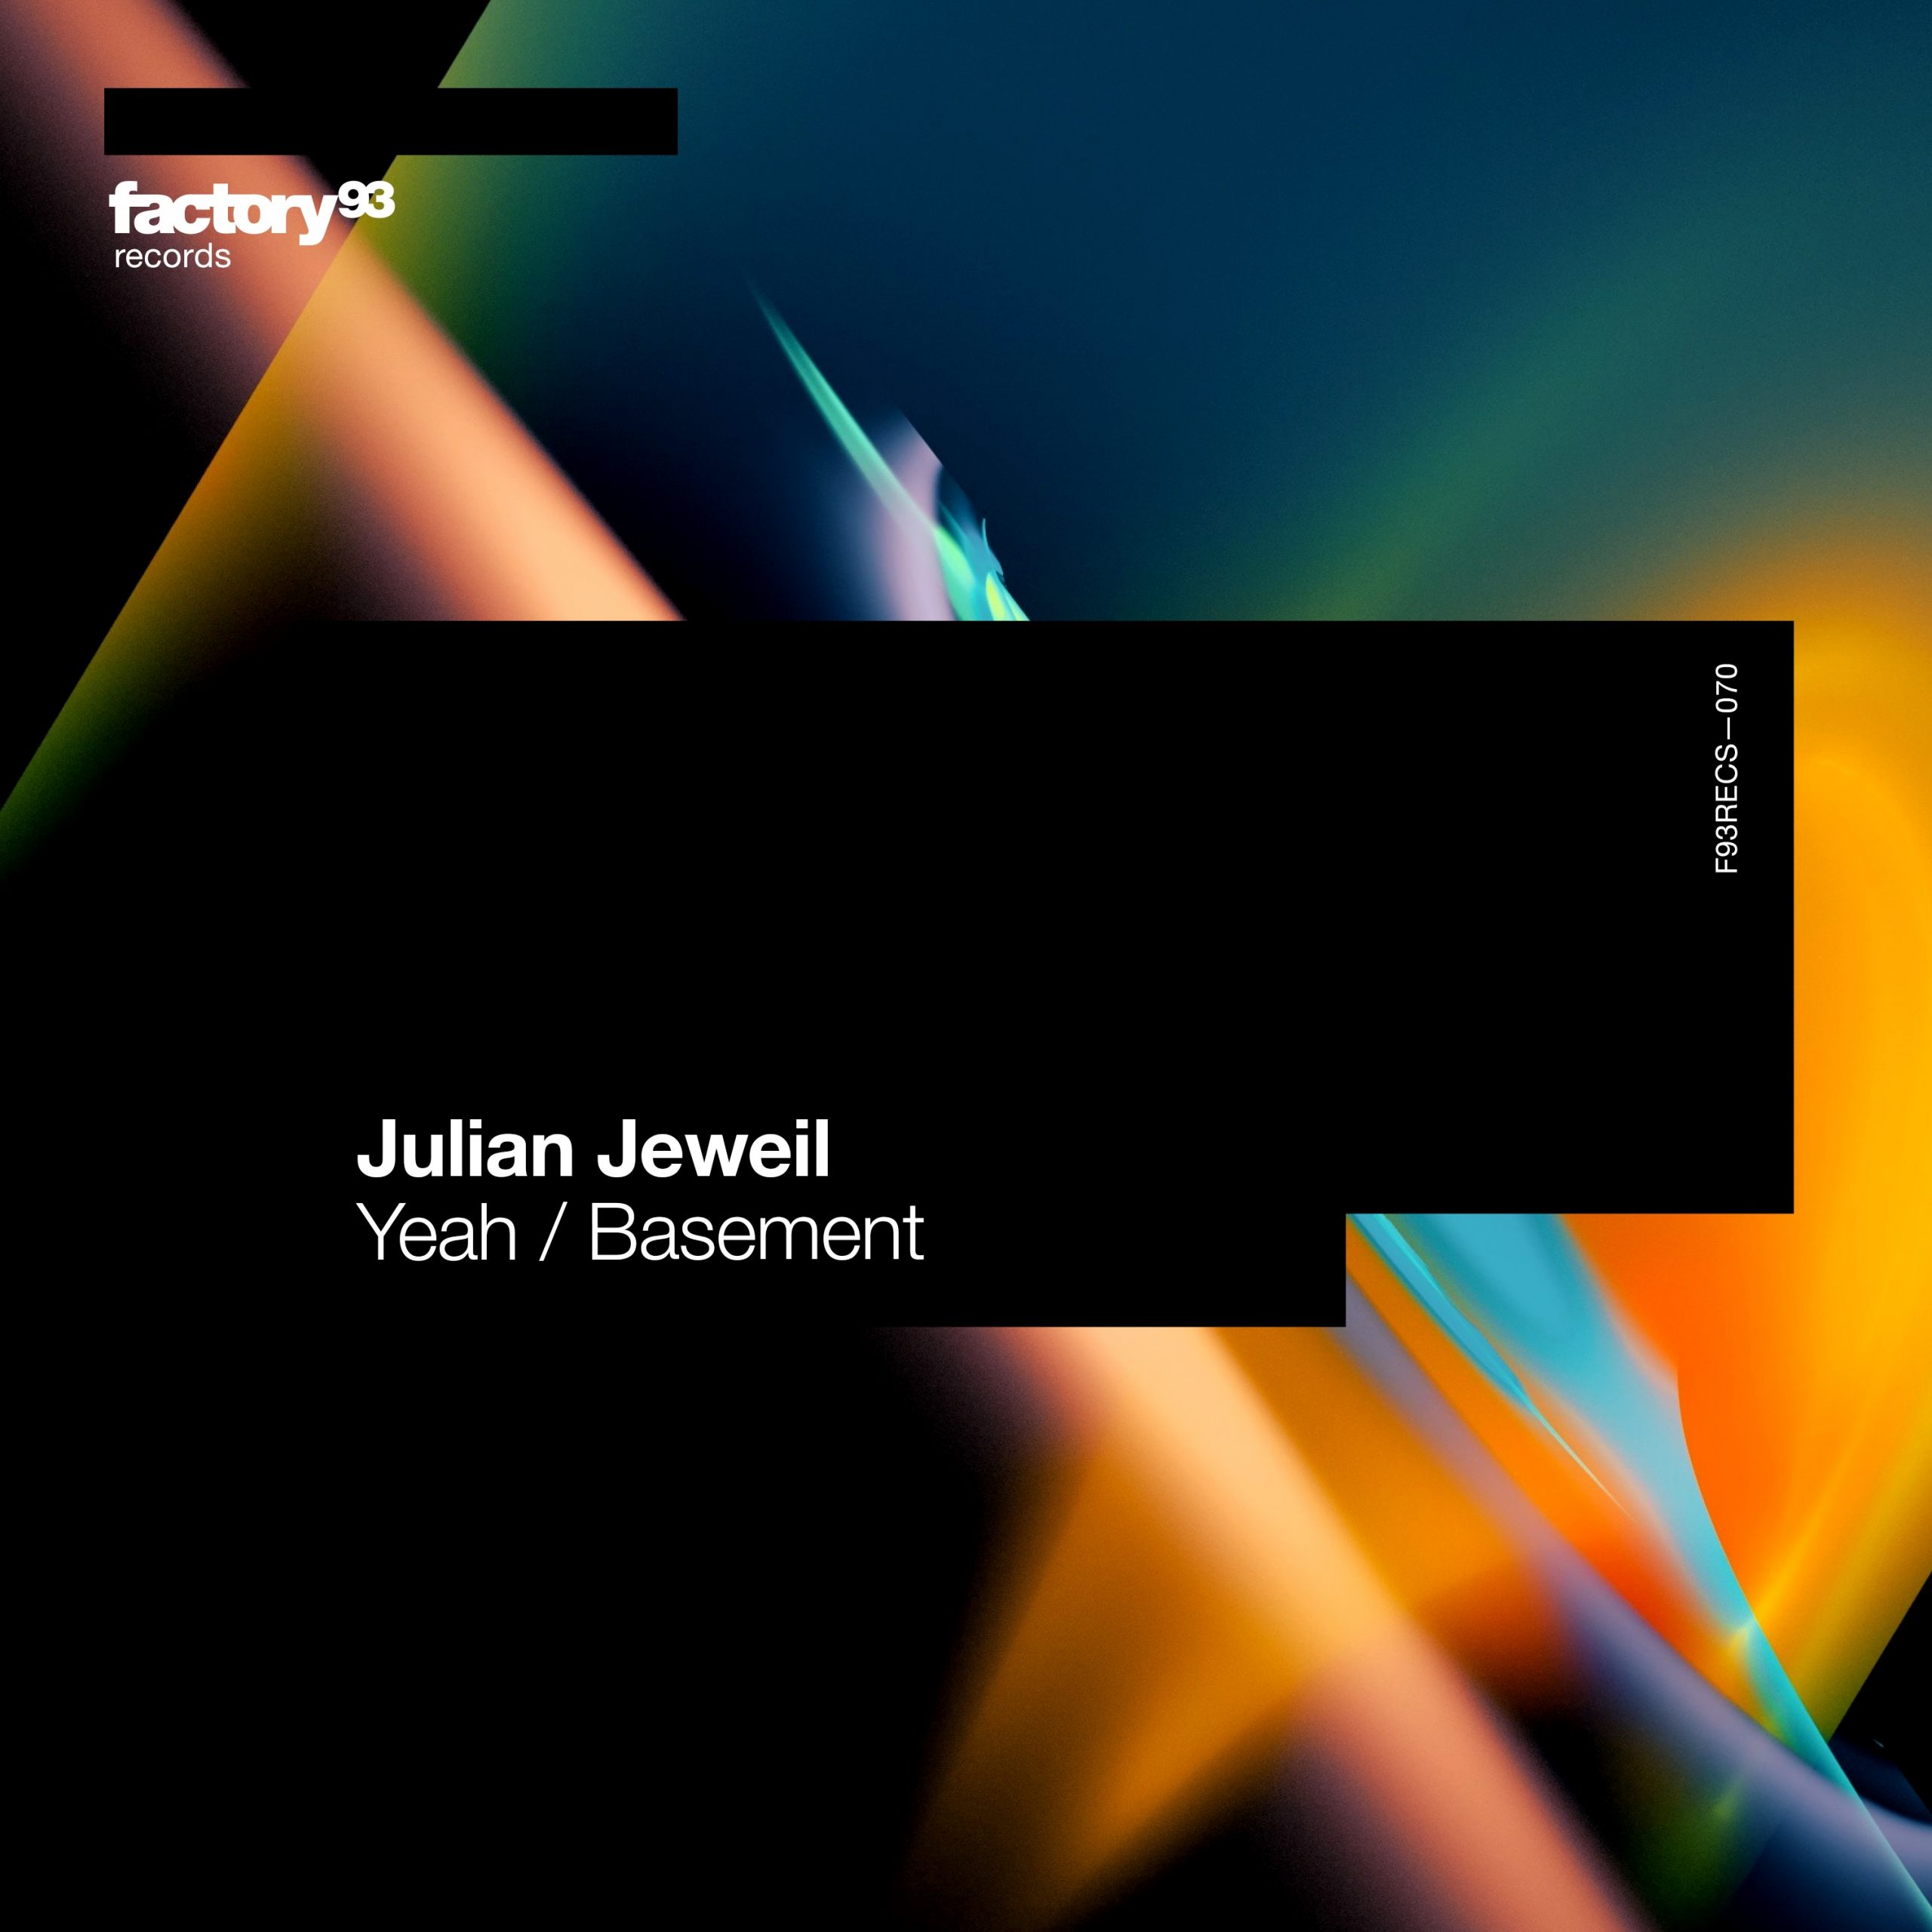 Julian Jeweil – Yeah / Basement